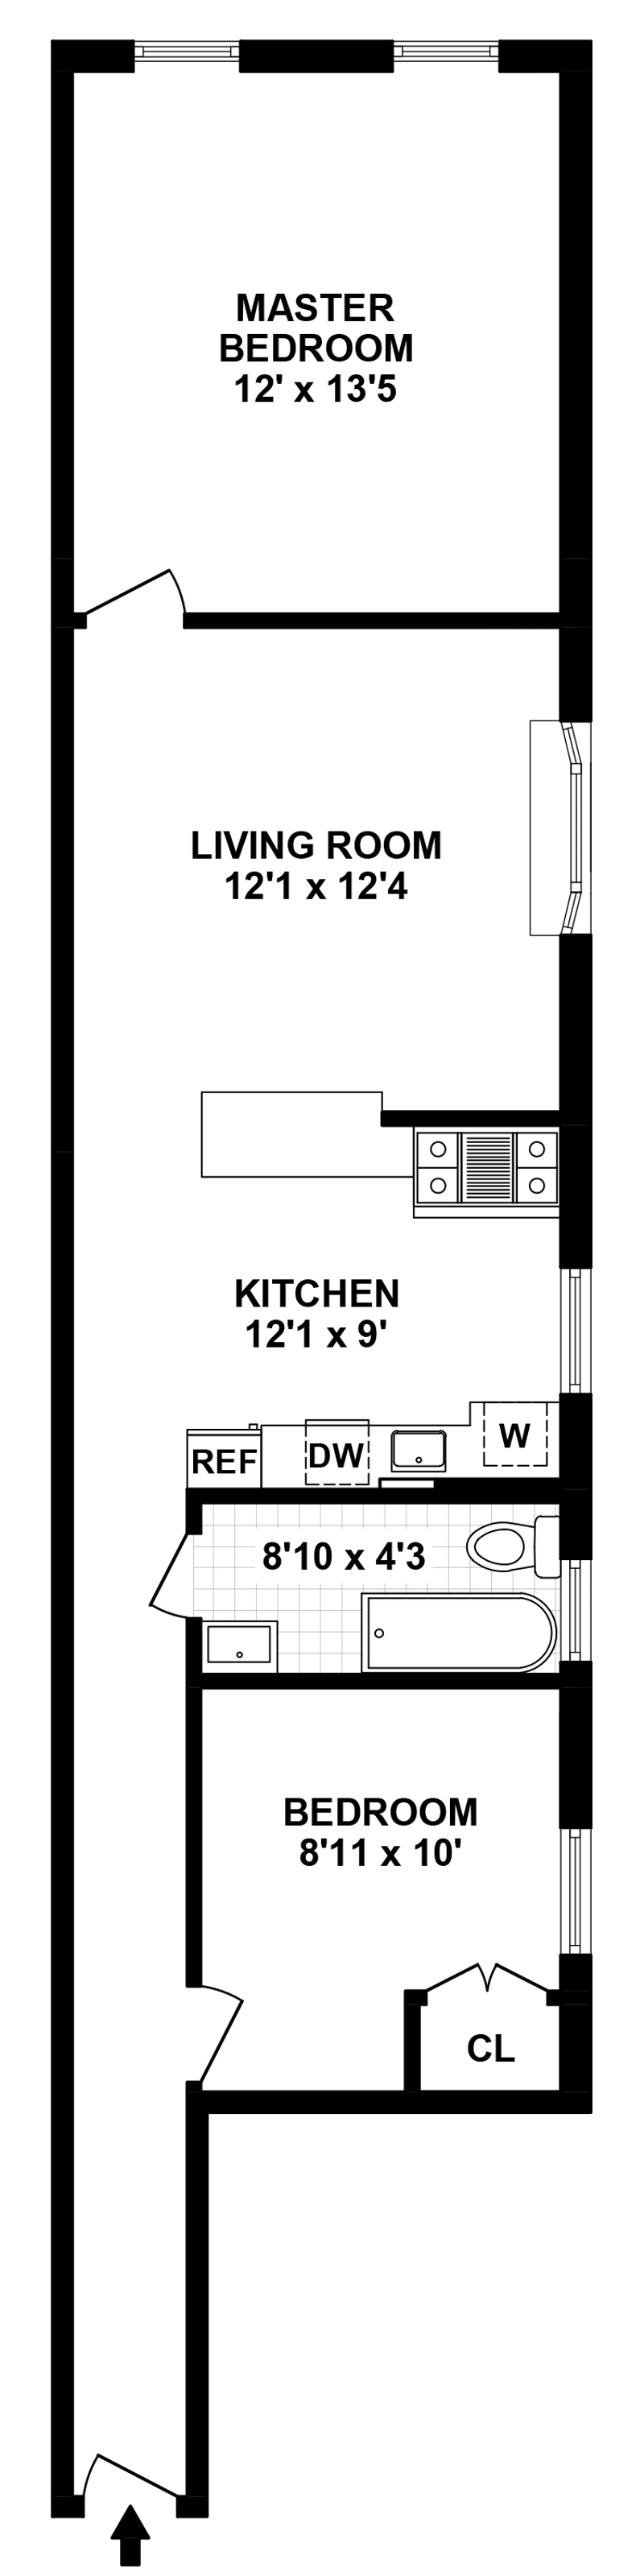 Floorplan for 930 St Nicholas Avenue, 43